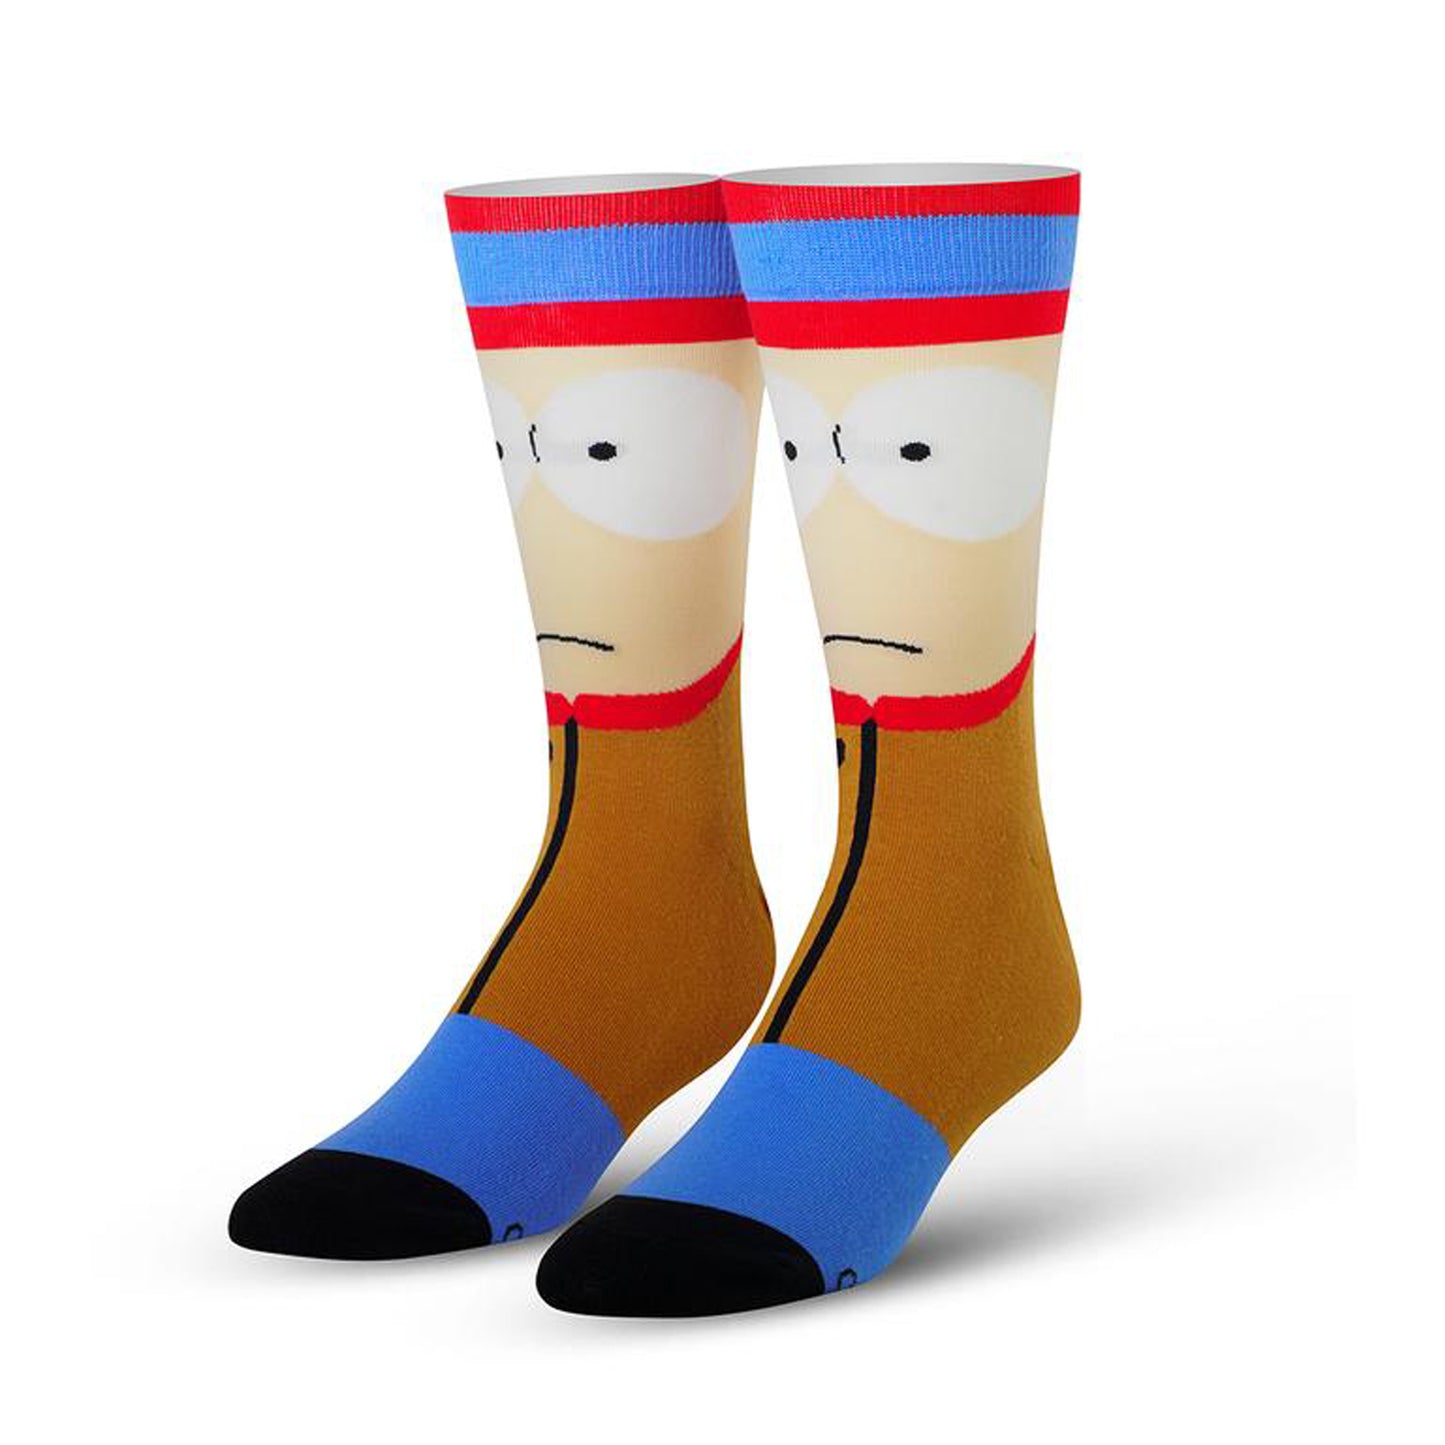 Odd Sox Men's Crew Socks - Stan Marsh (South Park)